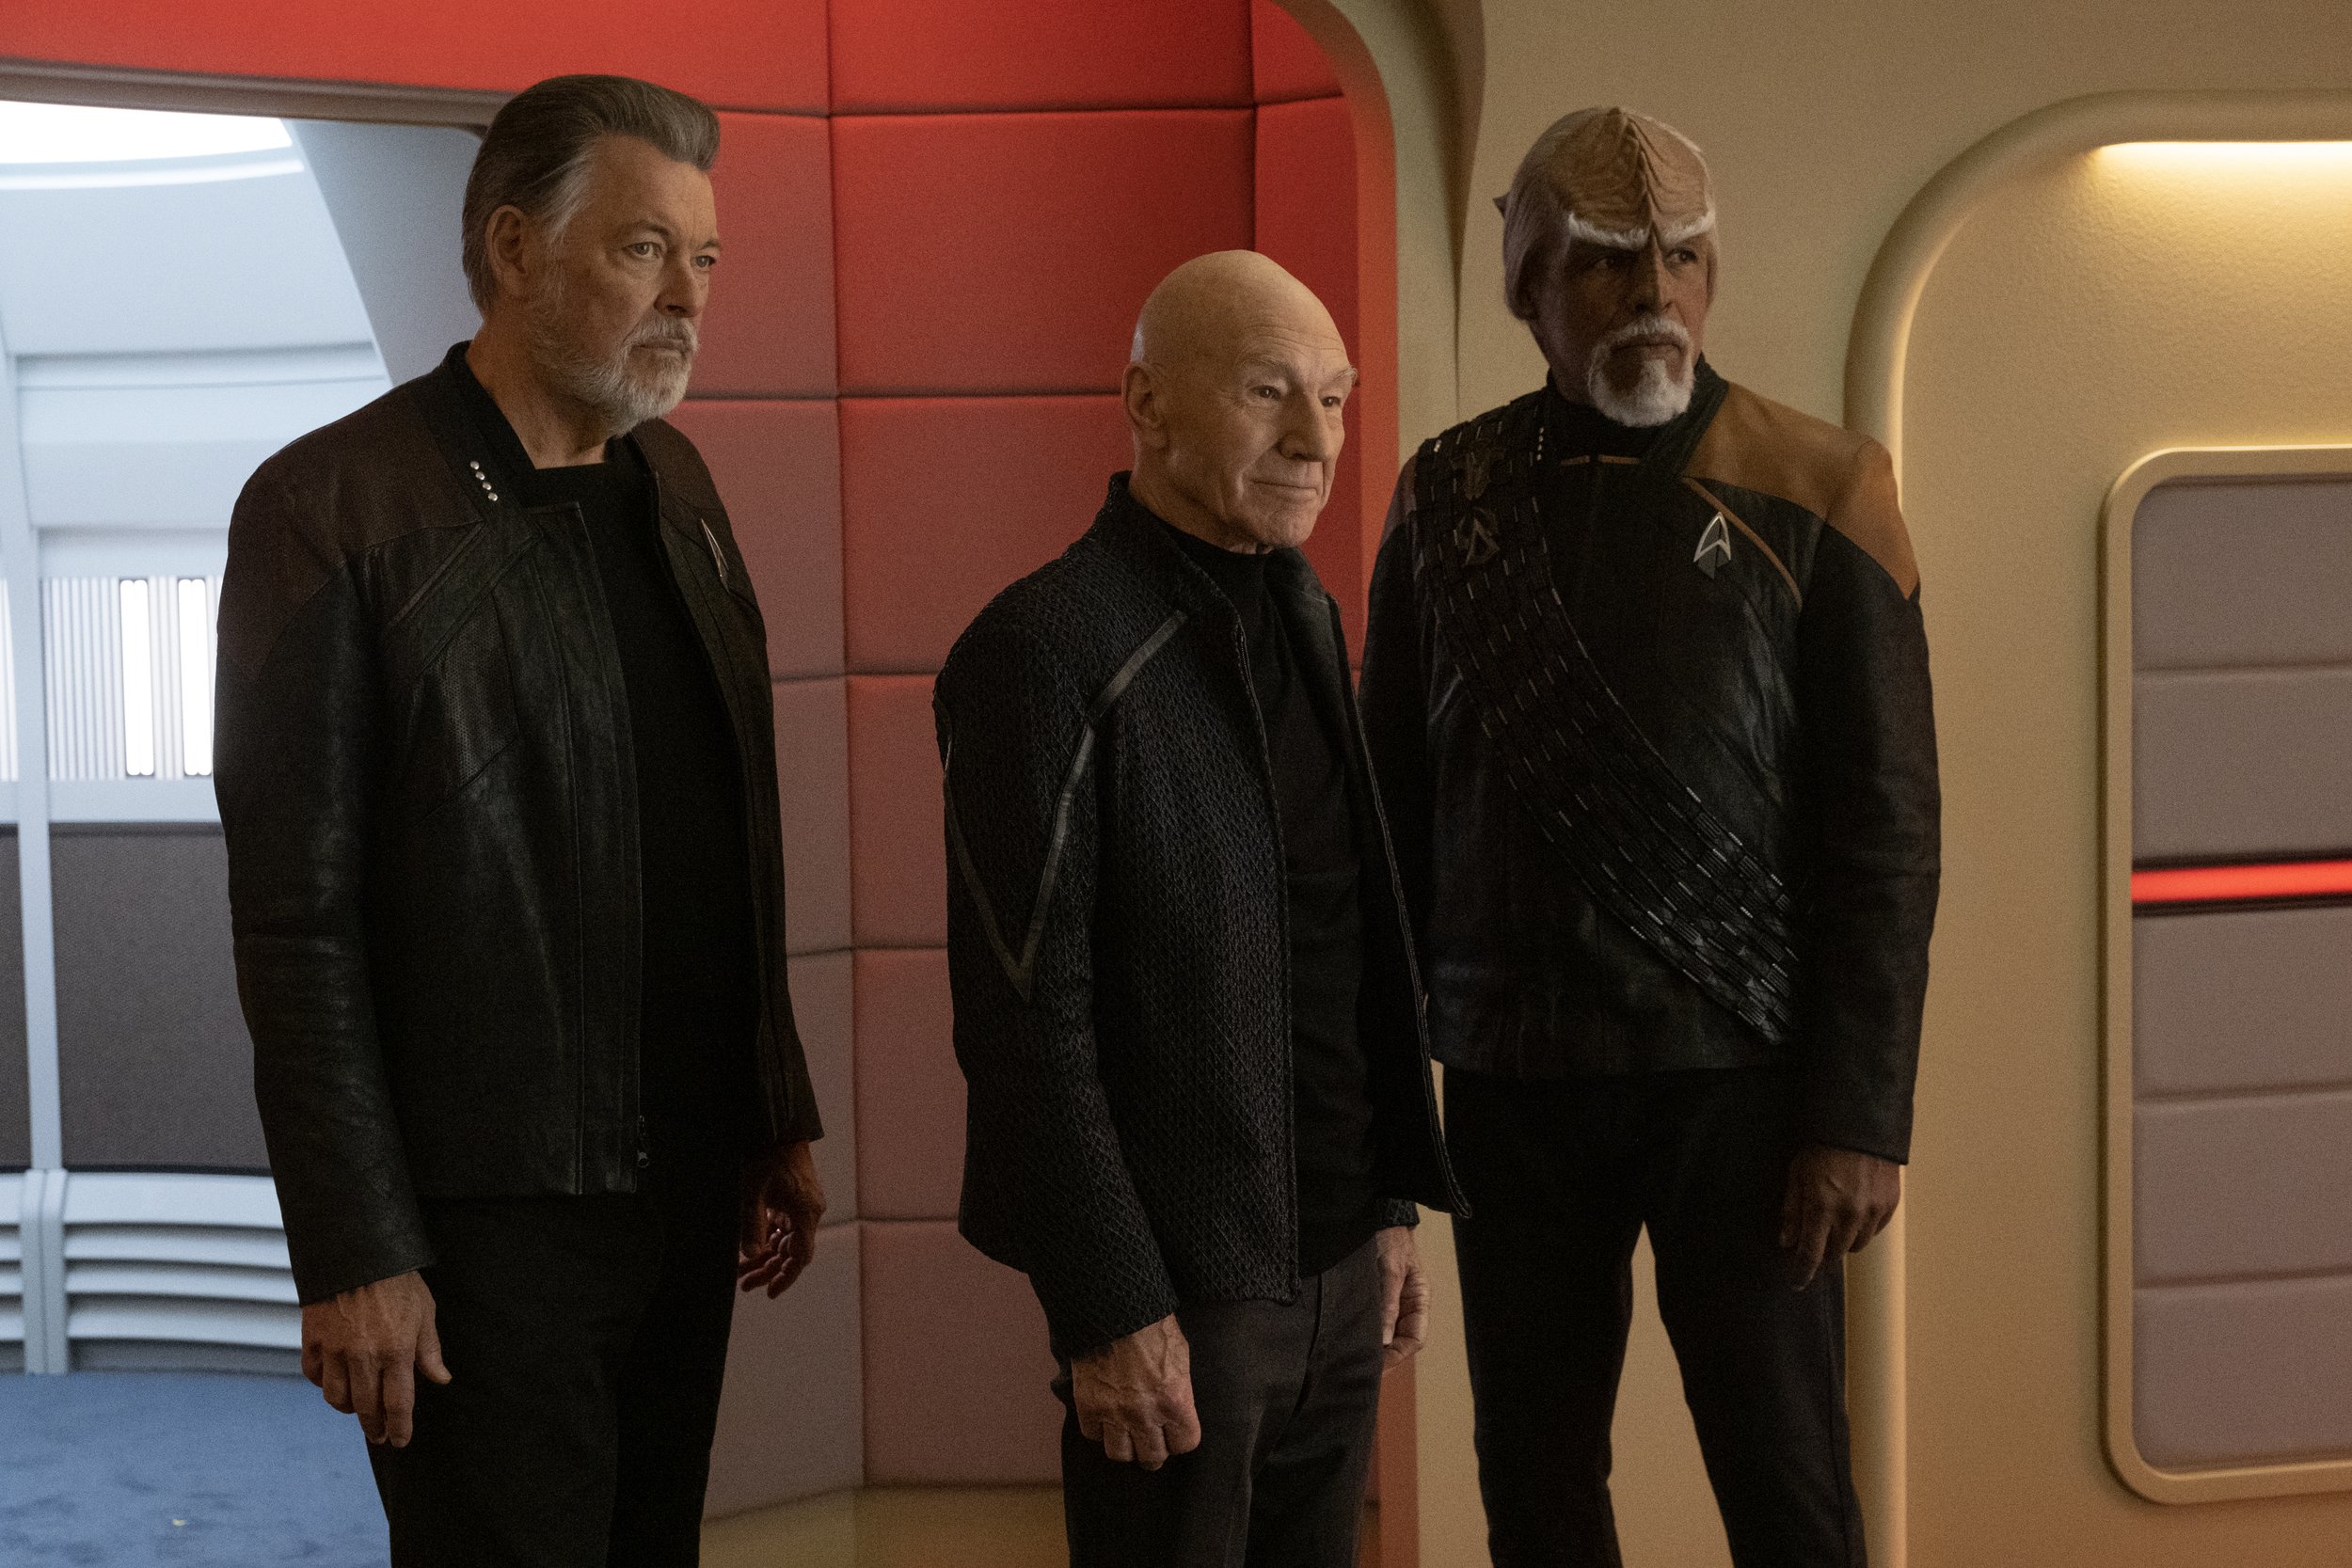   Jonathan Frakes  as Will Riker,  Patrick Stewart  as Picard and  Michael Dorn  as Worf.  Photo Credit: Trae Patton/Paramount+.  